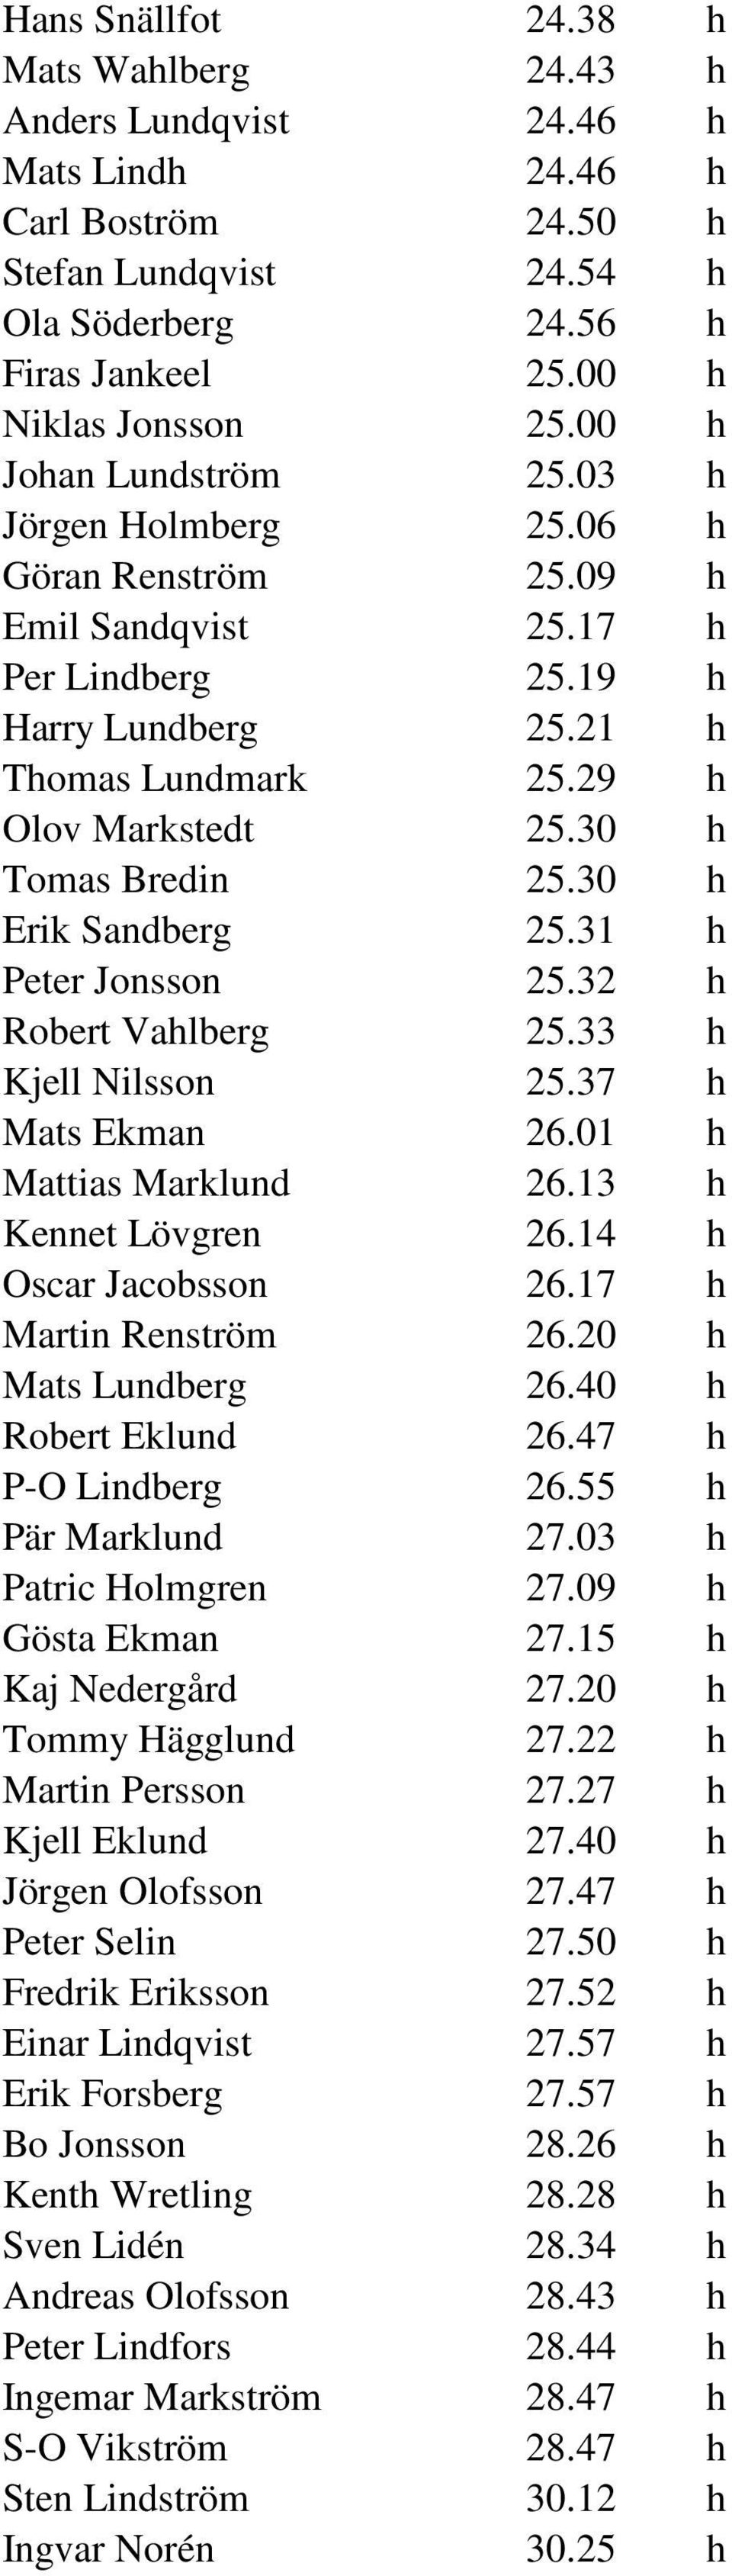 30 h Tomas Bredin 25.30 h Erik Sandberg 25.31 h Peter Jonsson 25.32 h Robert Vahlberg 25.33 h Kjell Nilsson 25.37 h Mats Ekman 26.01 h Mattias Marklnd 26.13 h Kennet Lövgren 26.